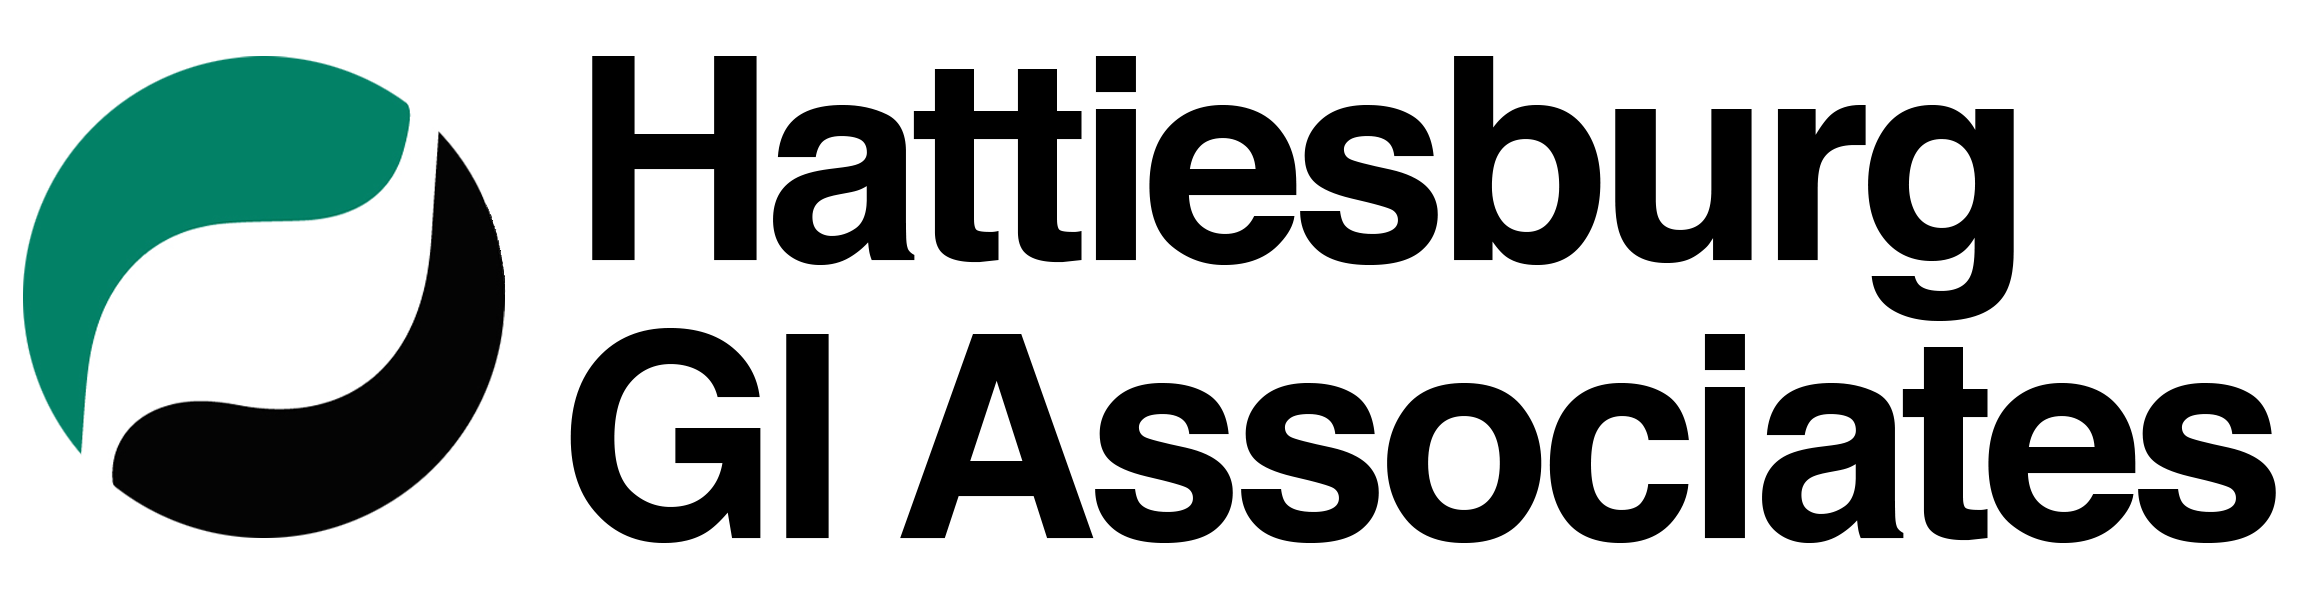 Kobe-logo